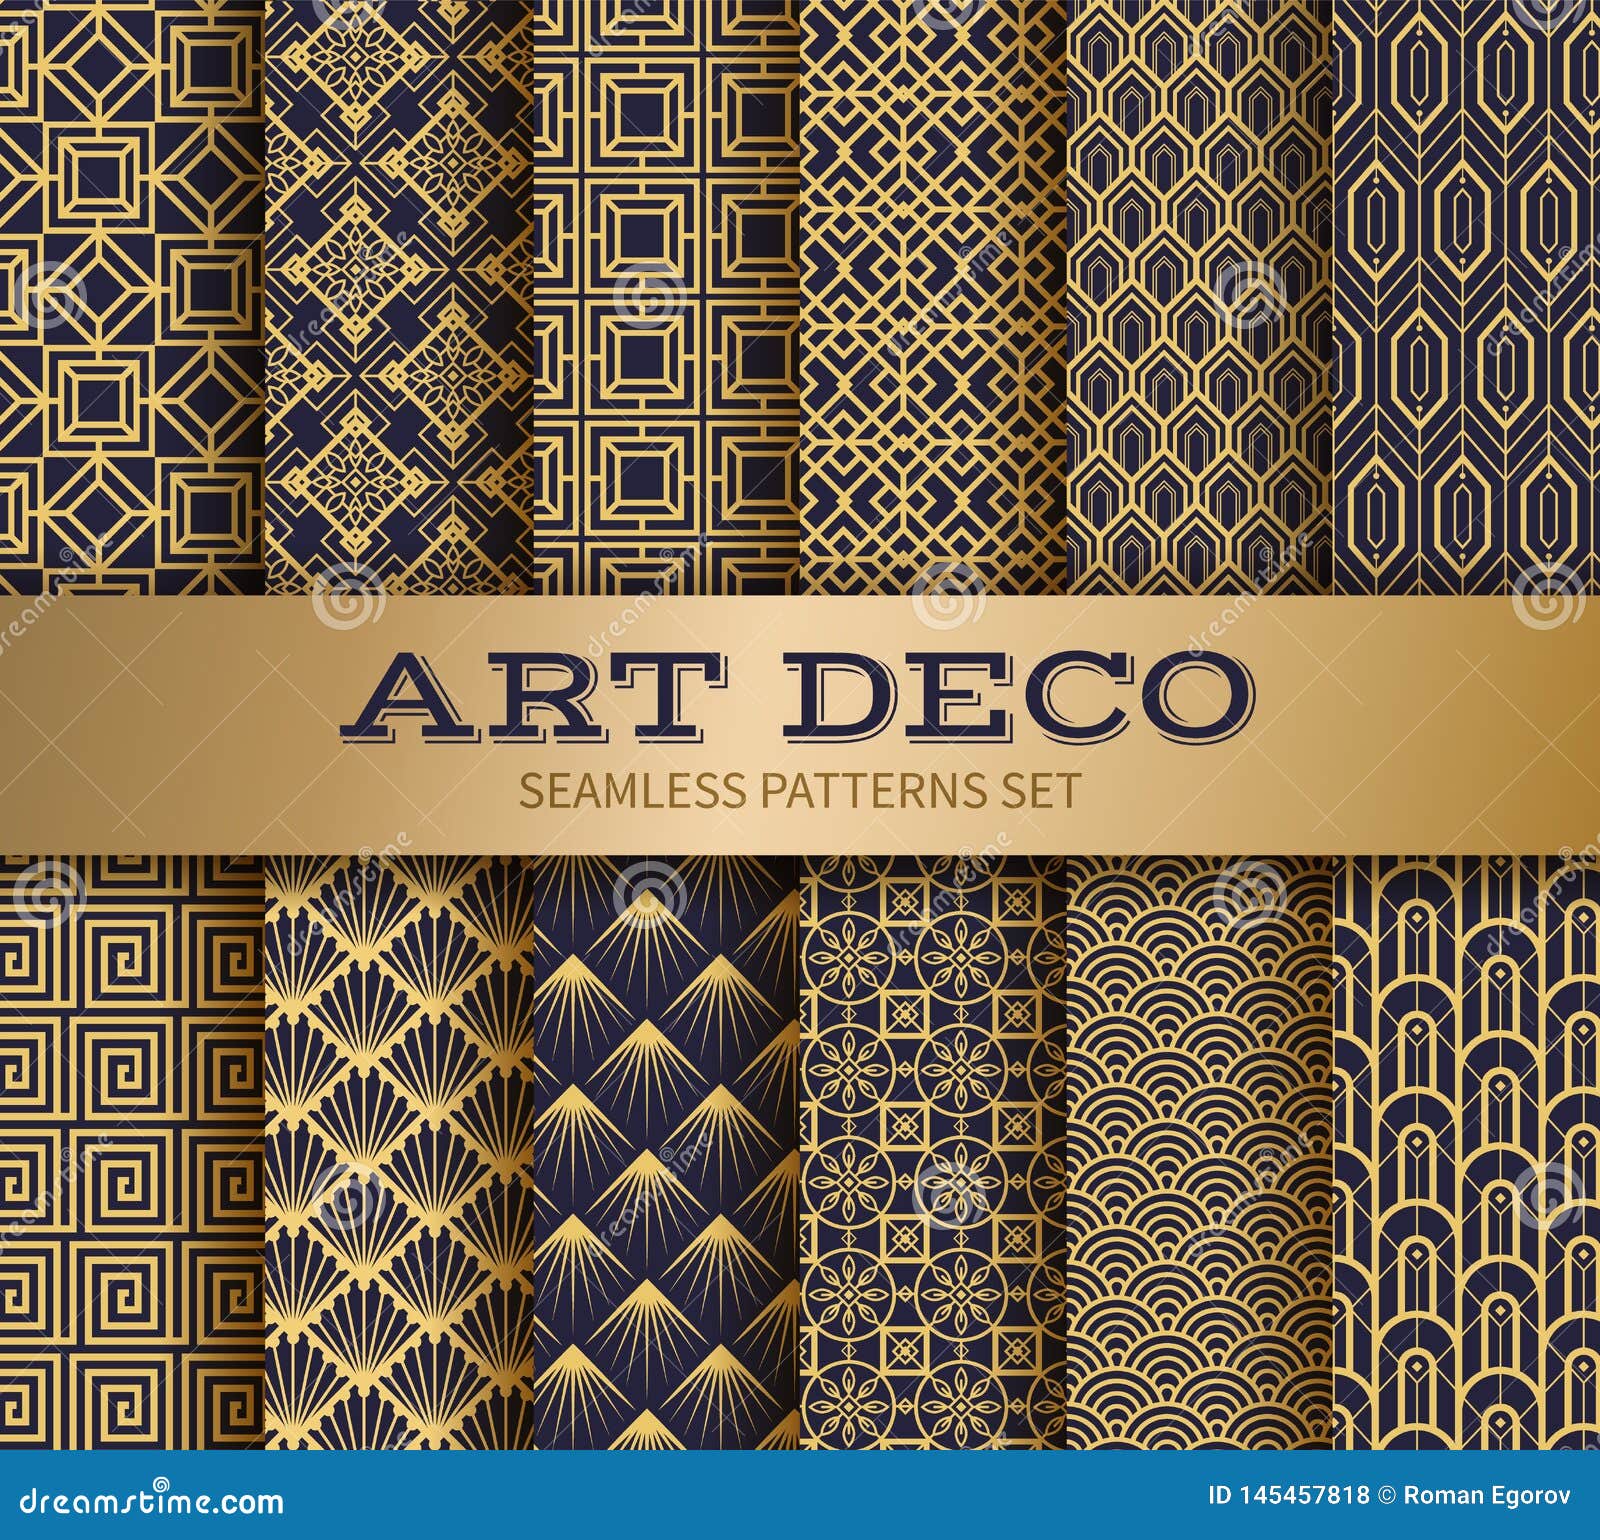 art deco seamless pattern. luxury geometric nouveau wallpaper, elegant classic retro ornament.  golden abstract